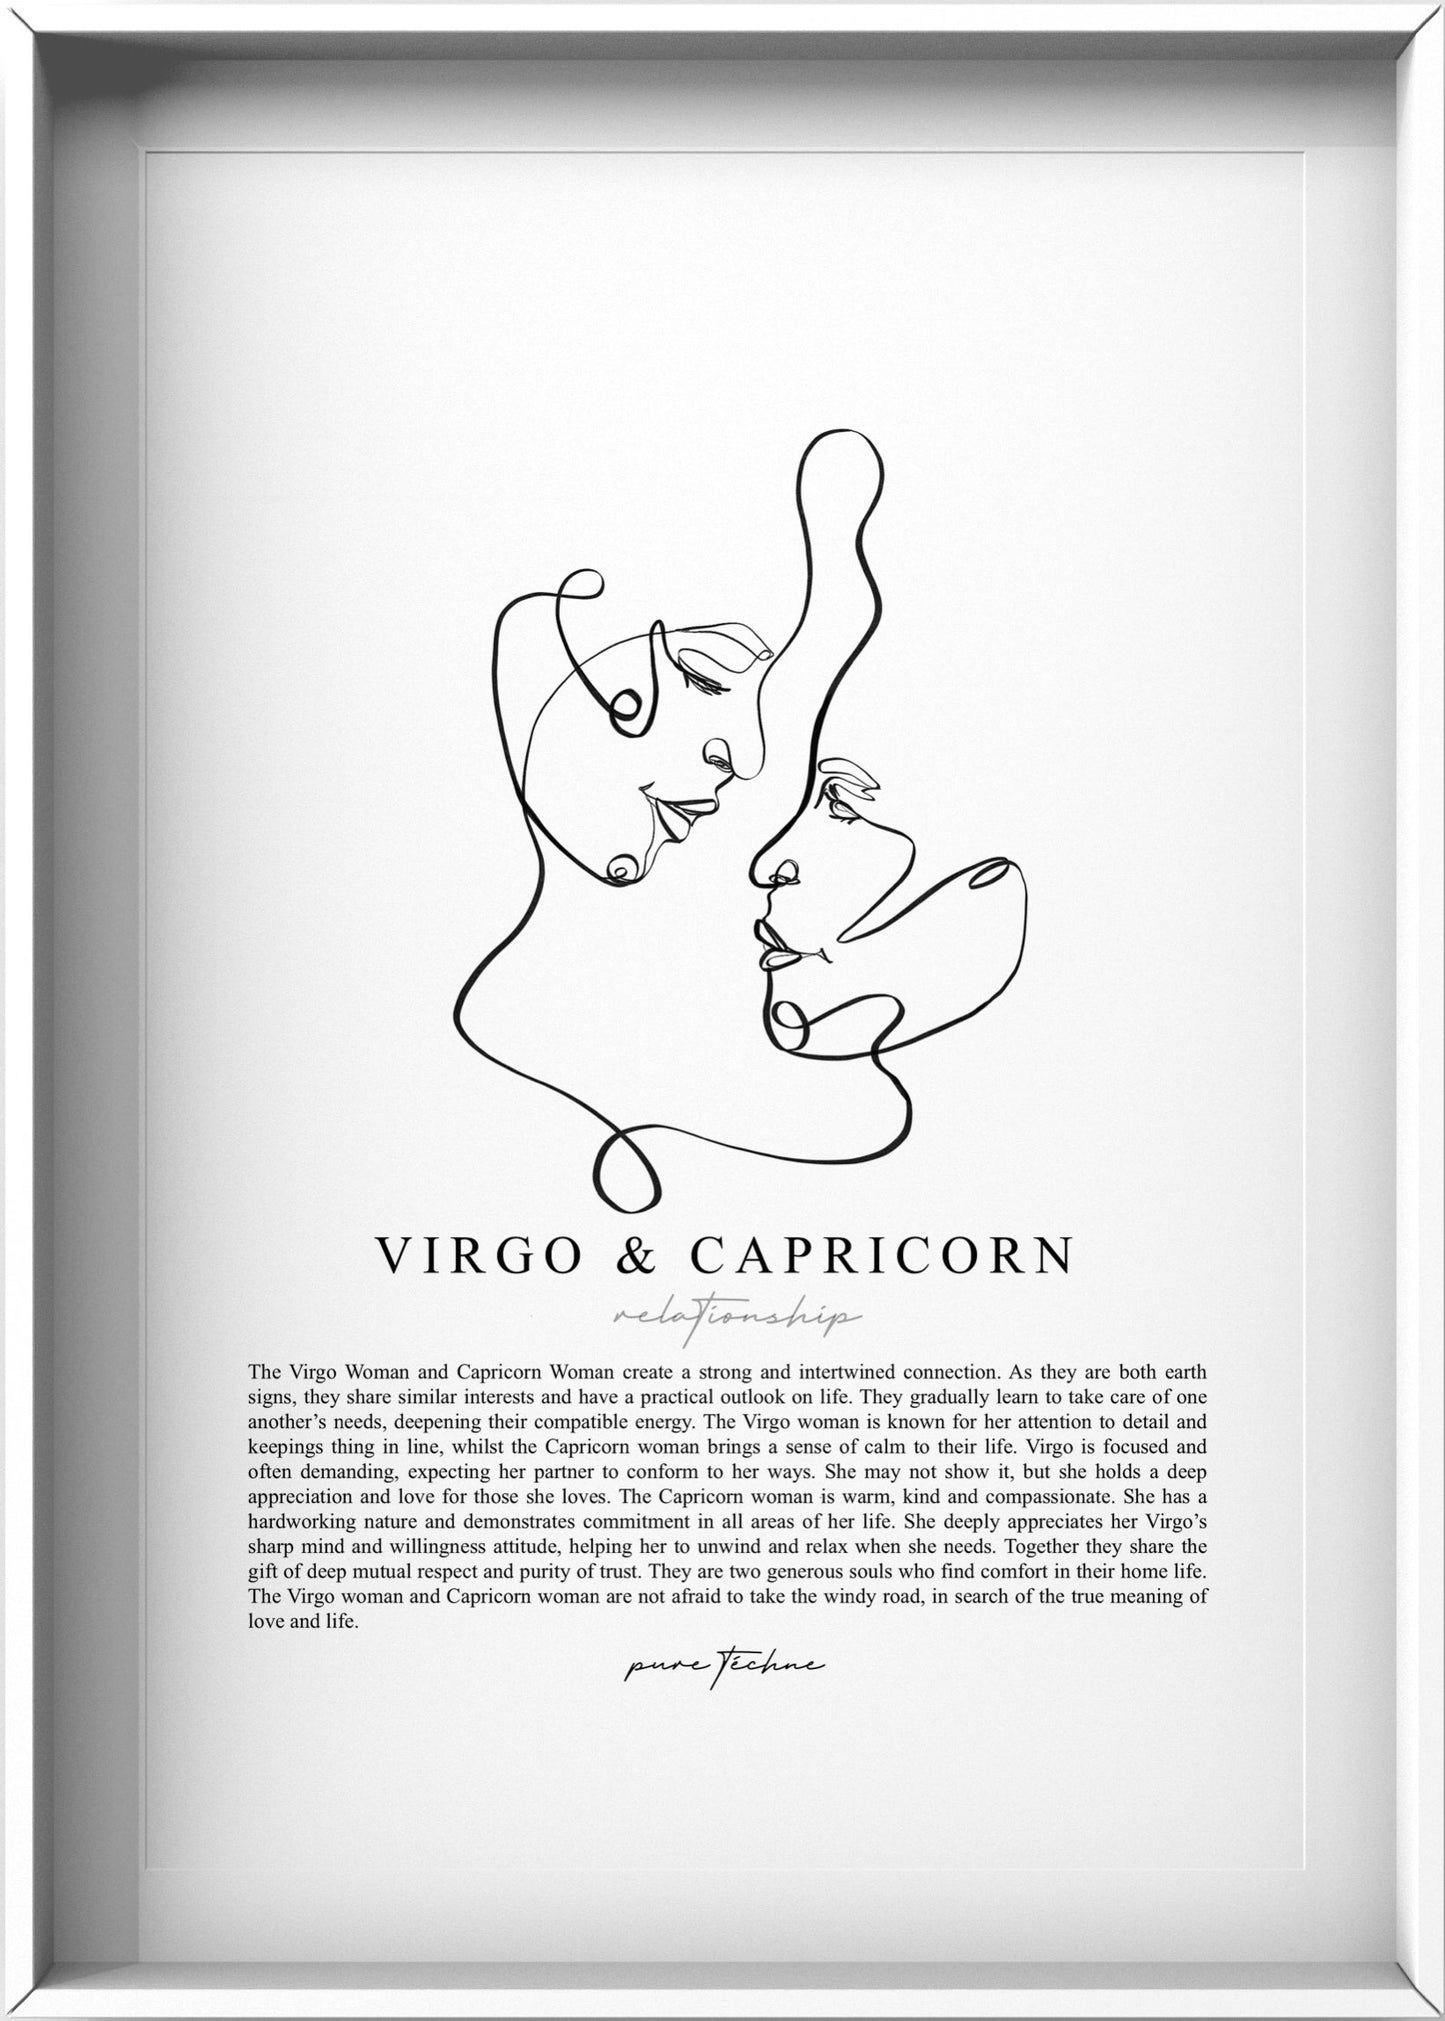 Virgo Woman & Capricorn Woman